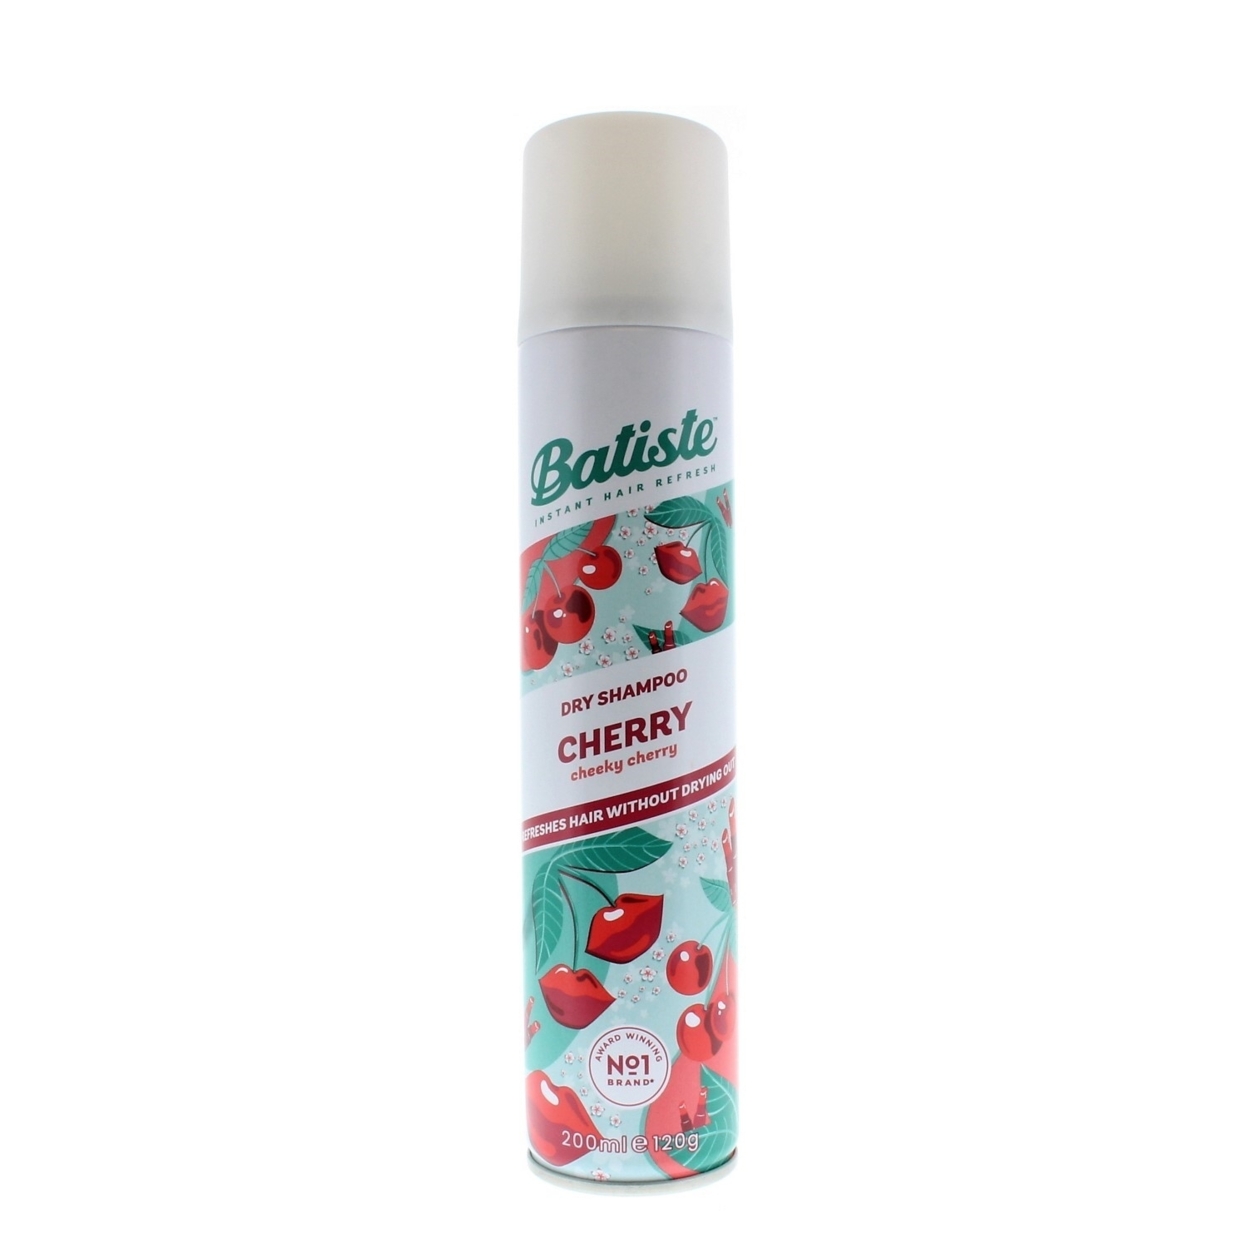 Batiste Instant Hair Refresh Dry Shampoo Cherry Cheeky Cherry 200ml/120g